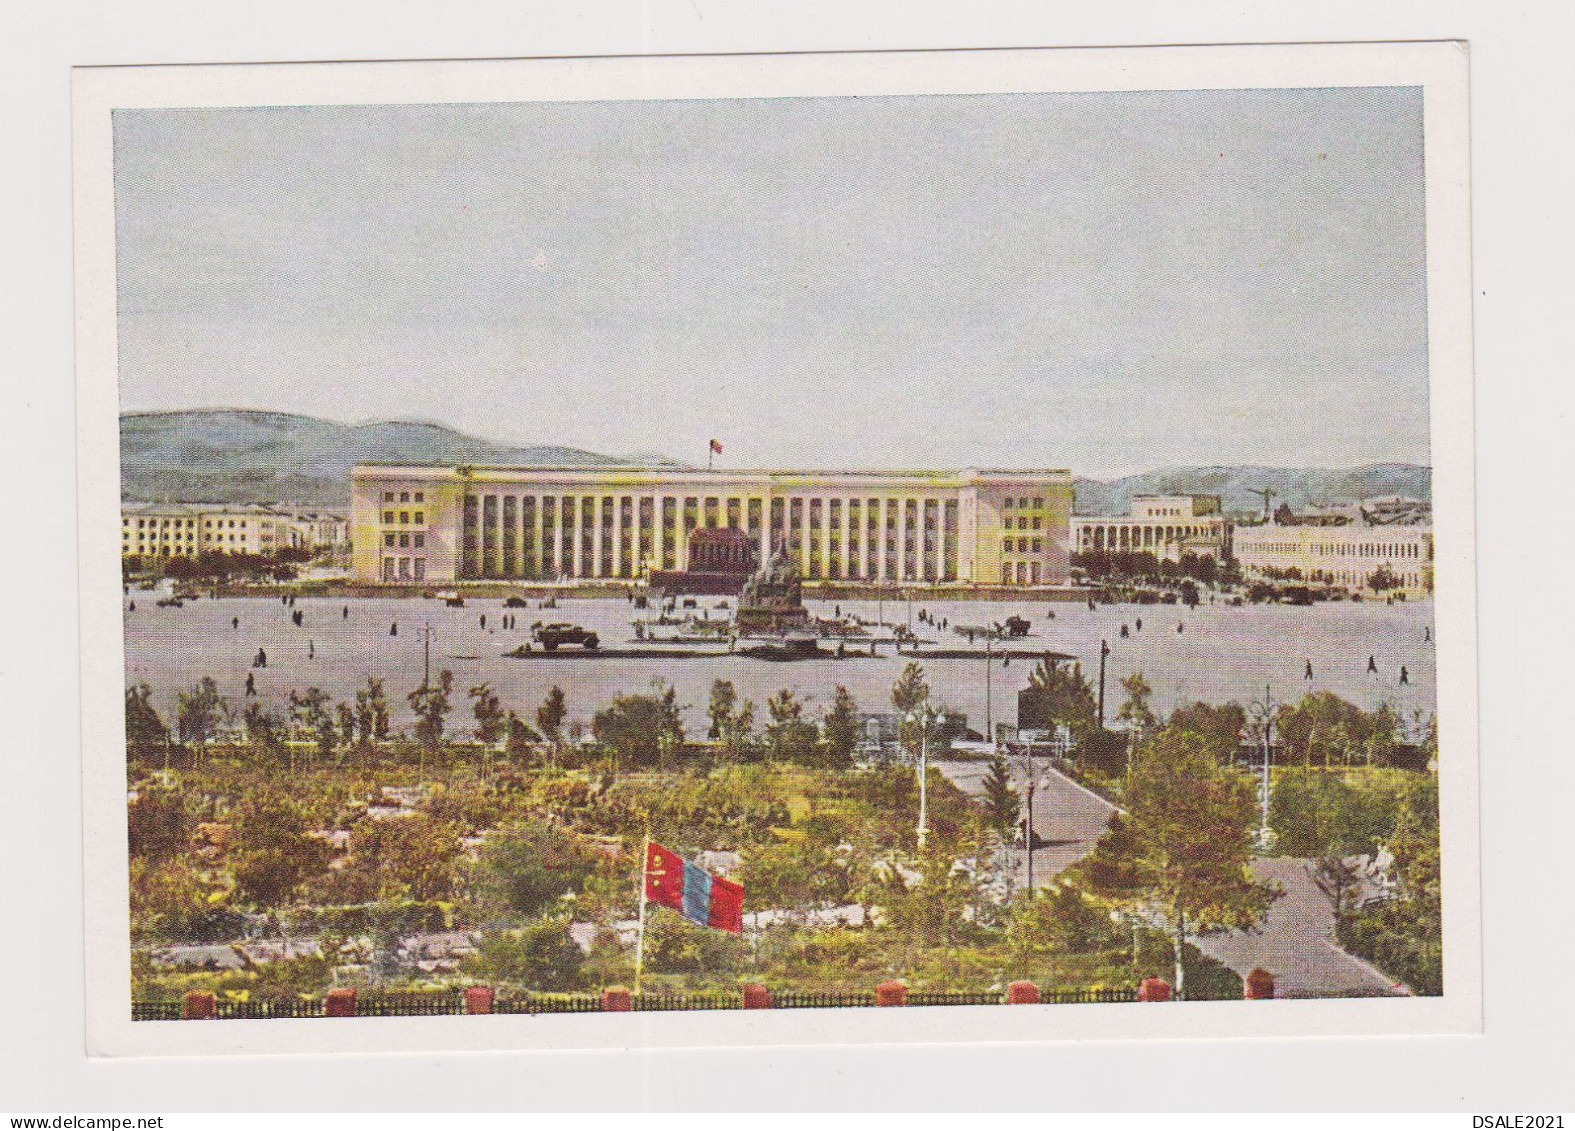 Mongolia Mongolei Mongolie Ulaanbaatar Sukhe-Bator Square With Mausoleum View 1960s Soviet USSR Photo Postcard (66627) - Mongolia